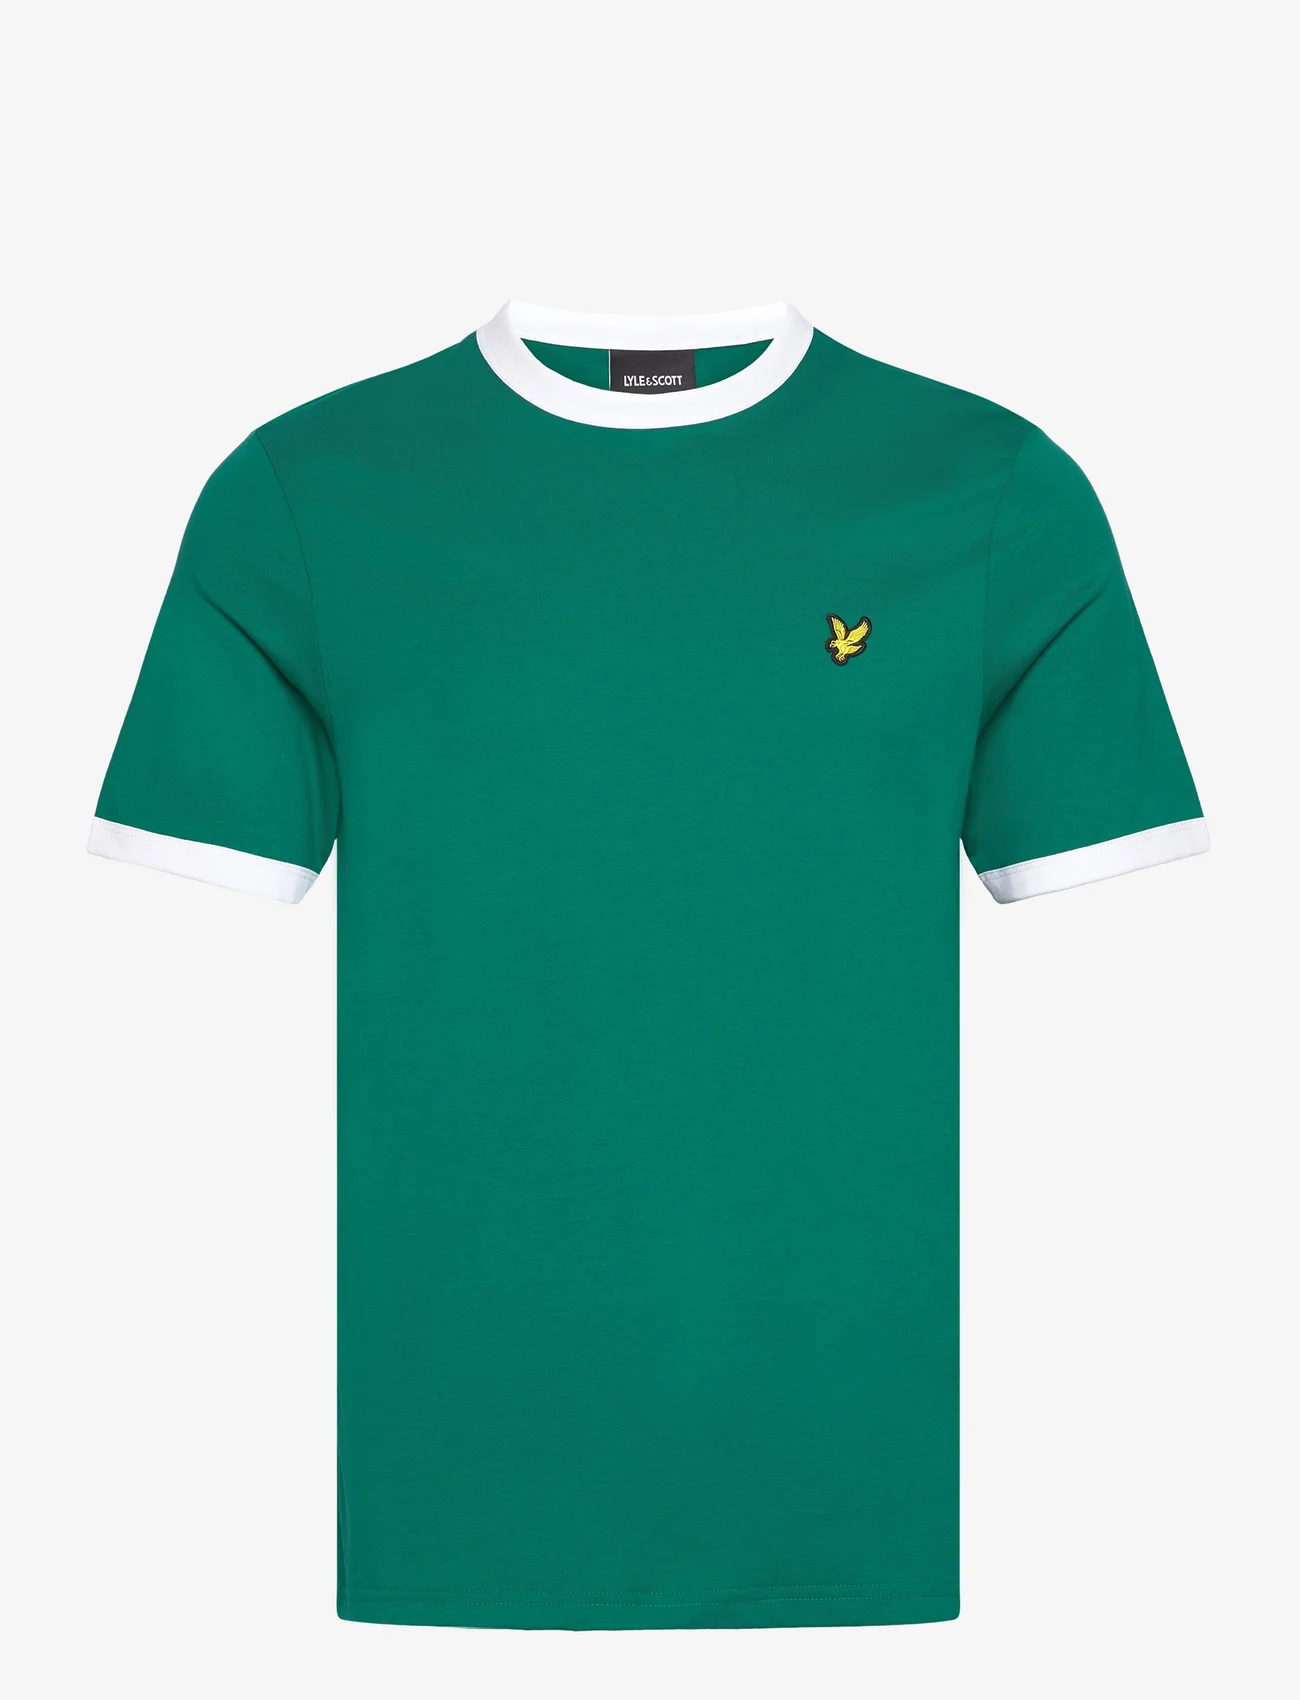 Lyle & Scott - Ringer T-Shirt - lowest prices - x166 court green / white - 0